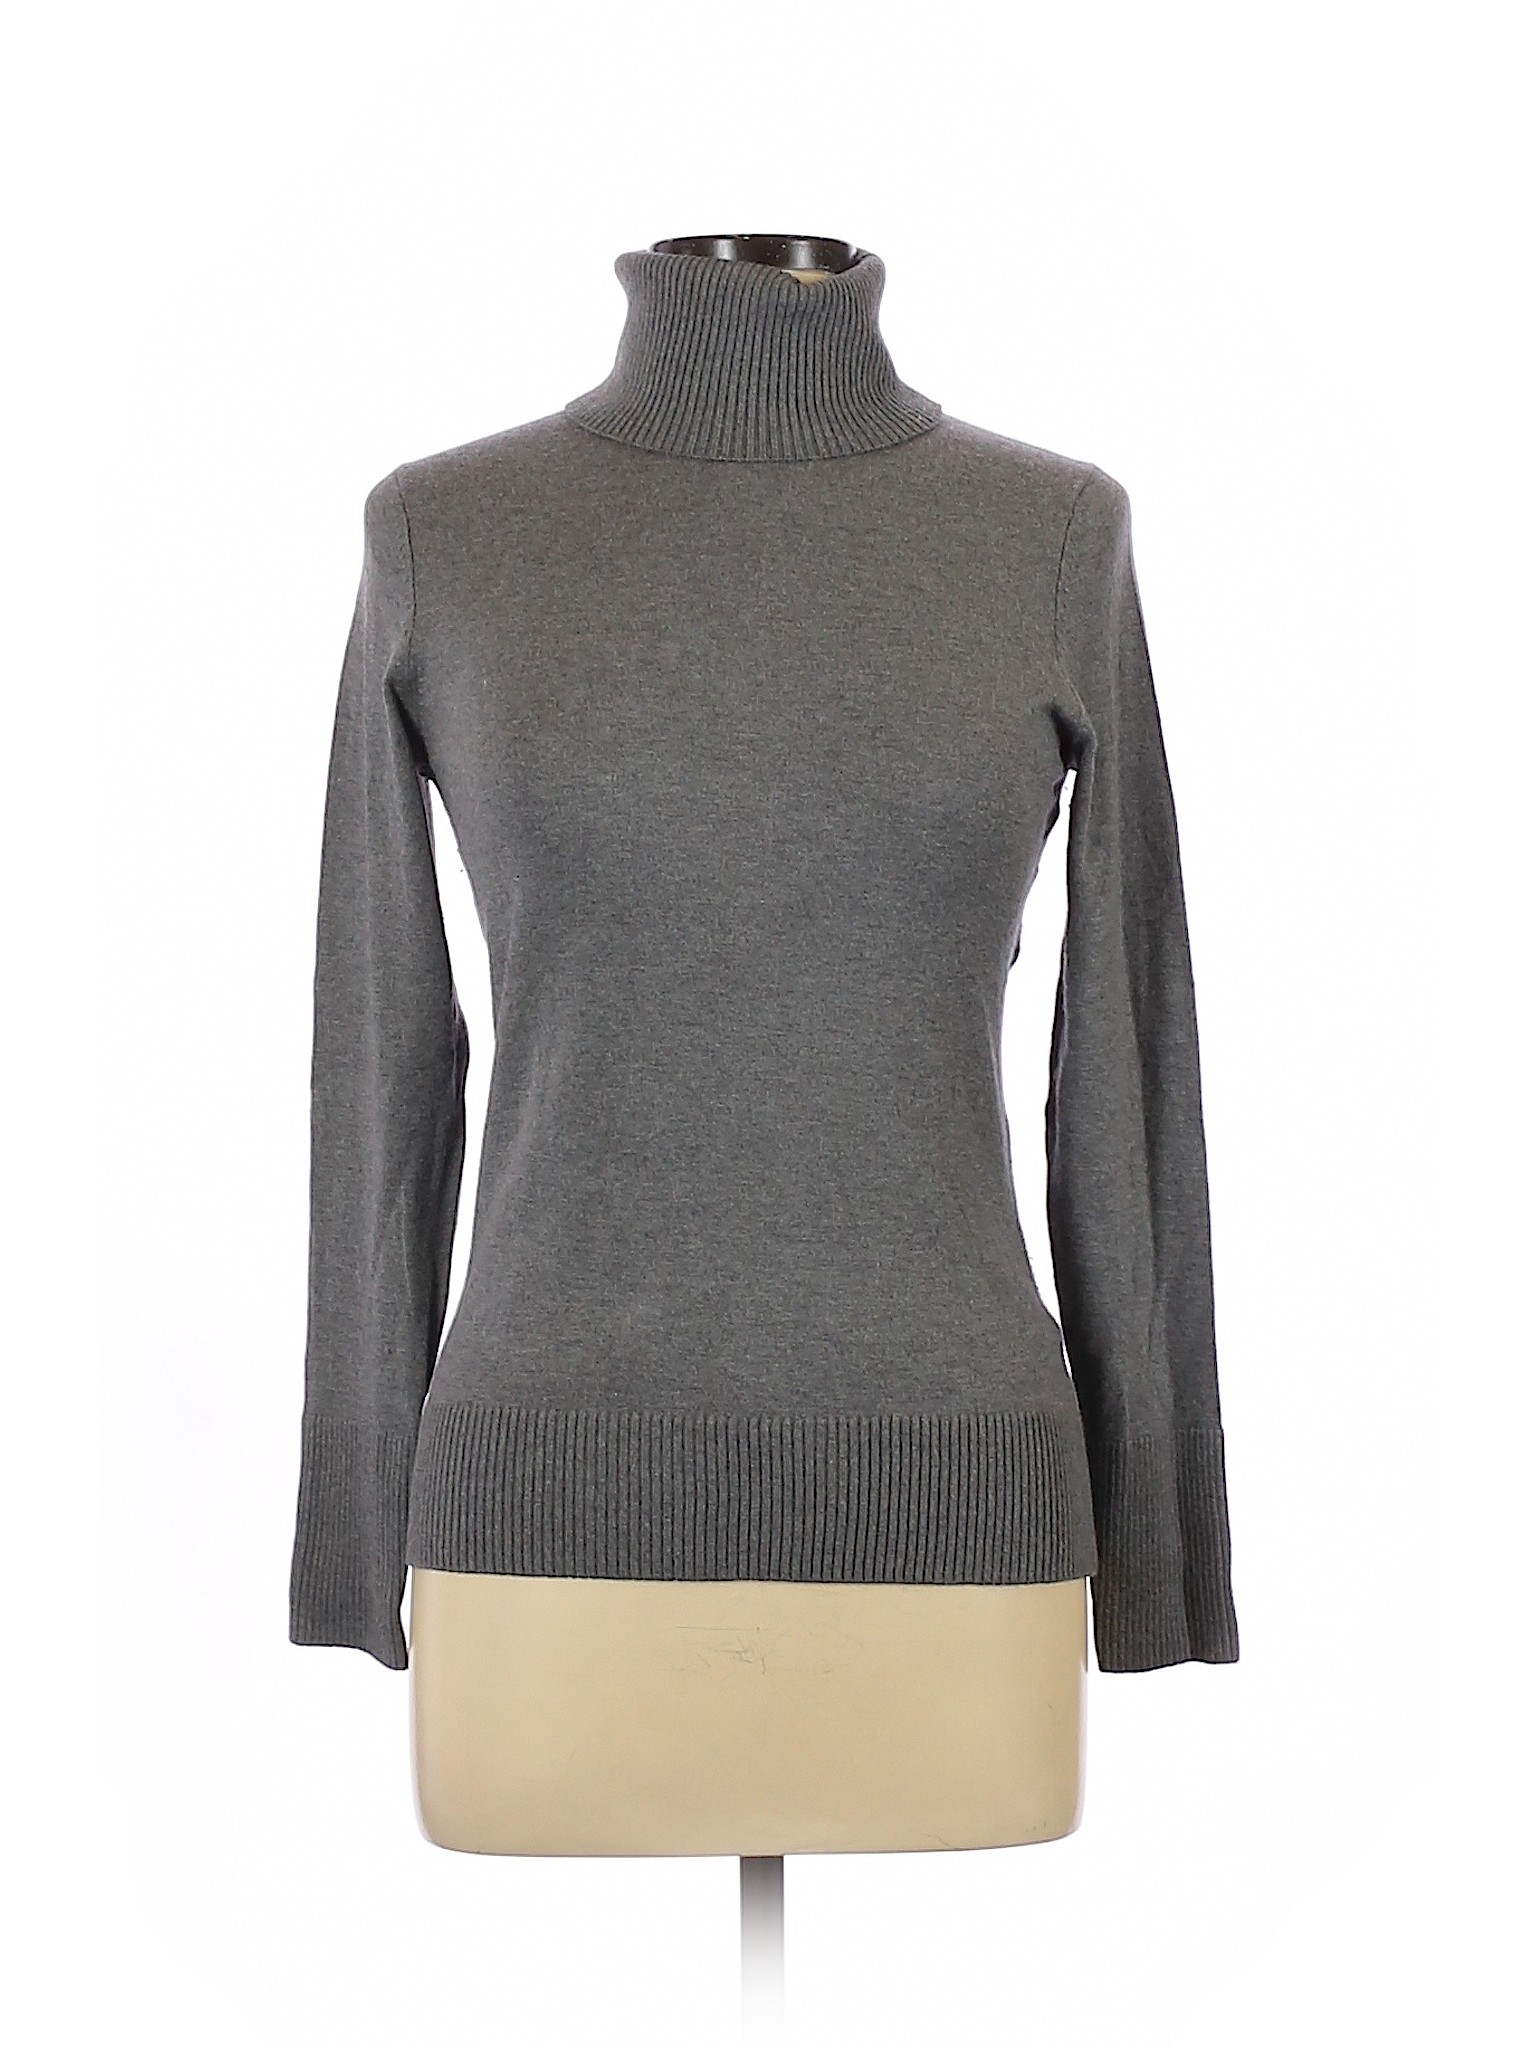 Banana Republic Women Gray Turtleneck Sweater S | eBay